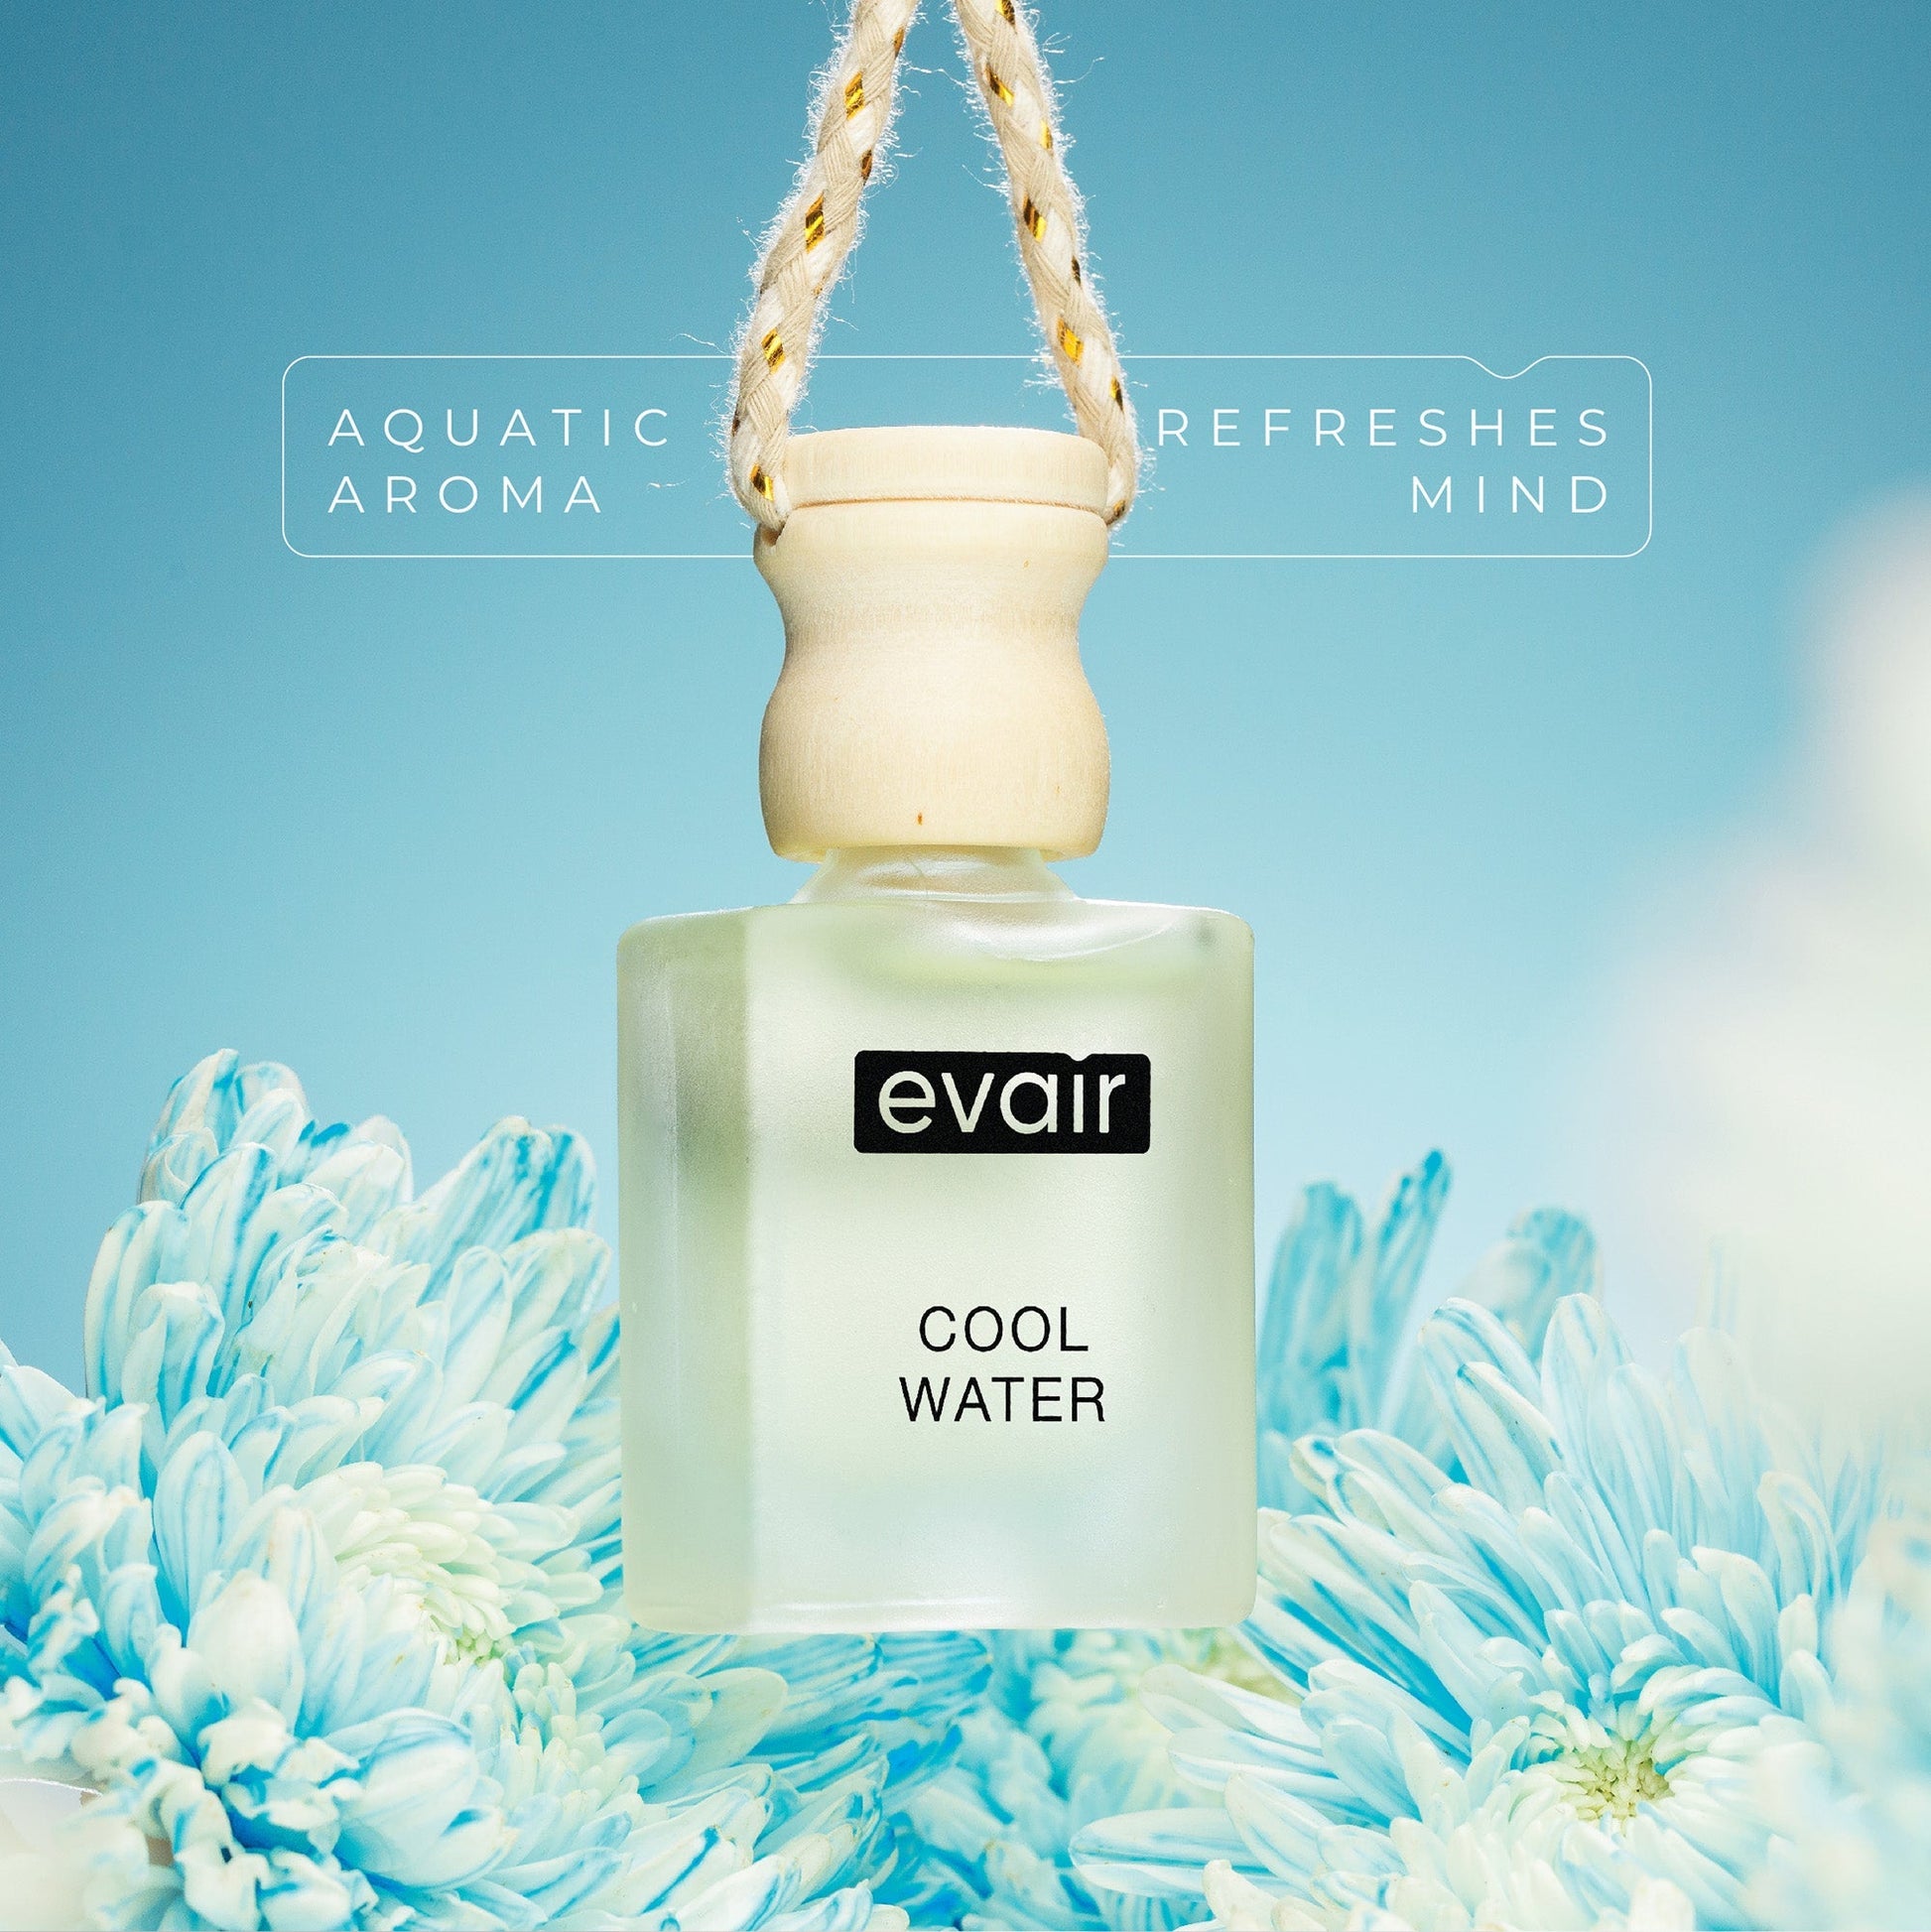 Evair Cool Water Car Perfume Glass Bottle wiith Flower